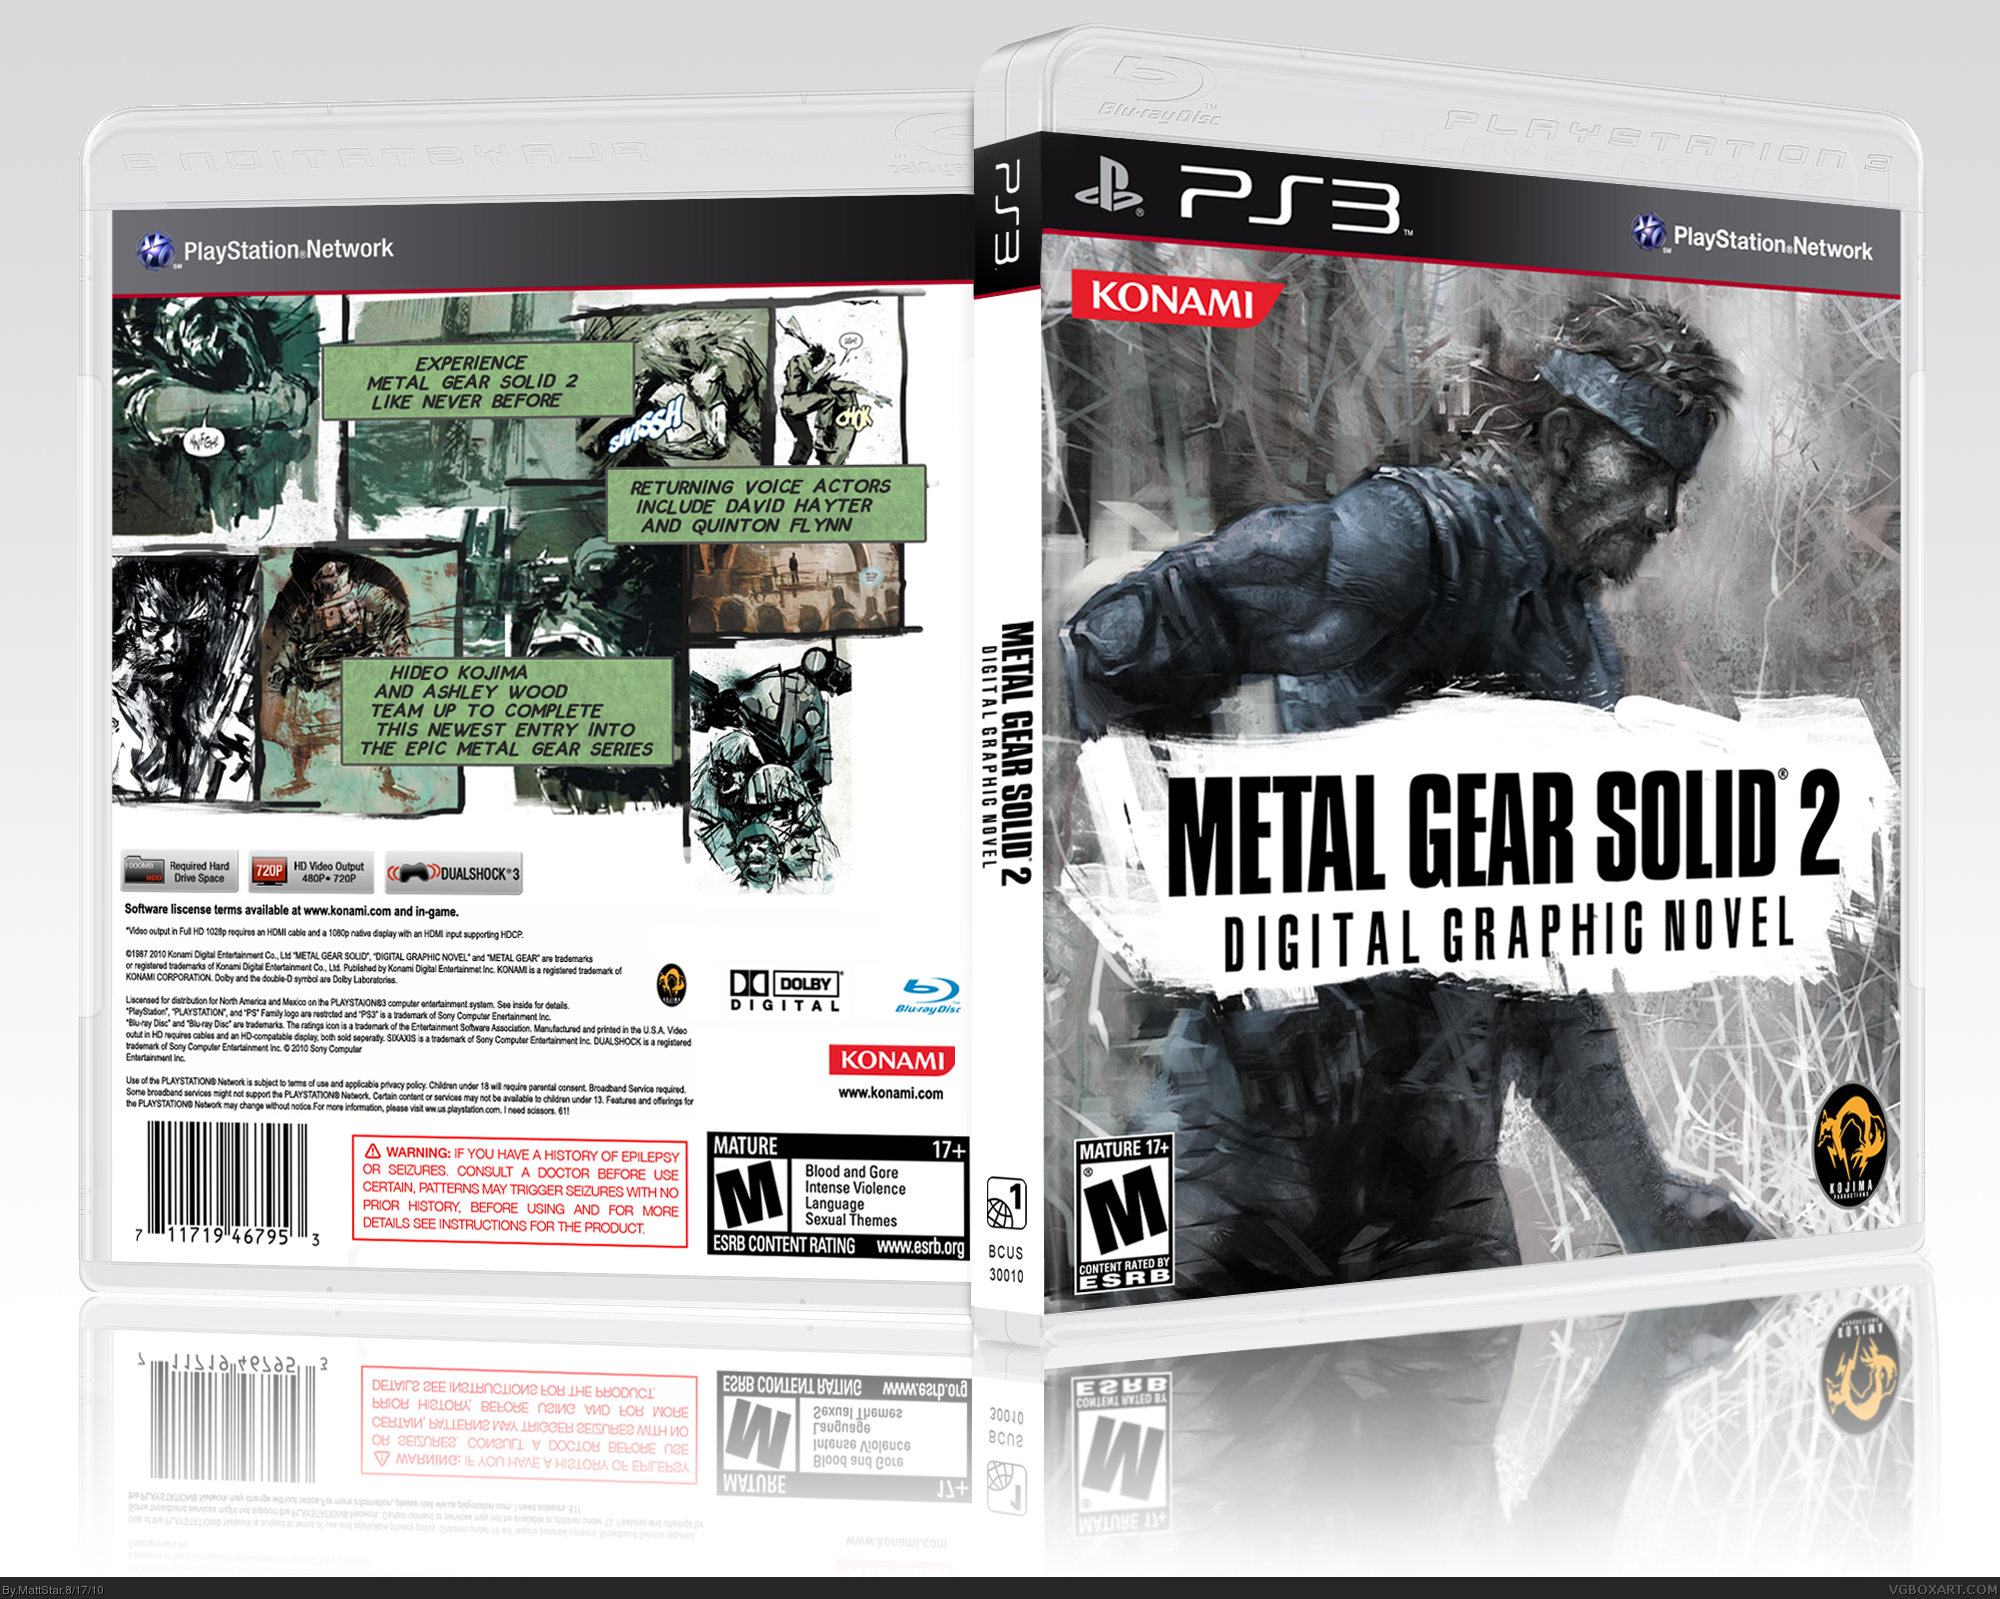 Metal Gear Solid 2: Digital Graphic Novel box cover